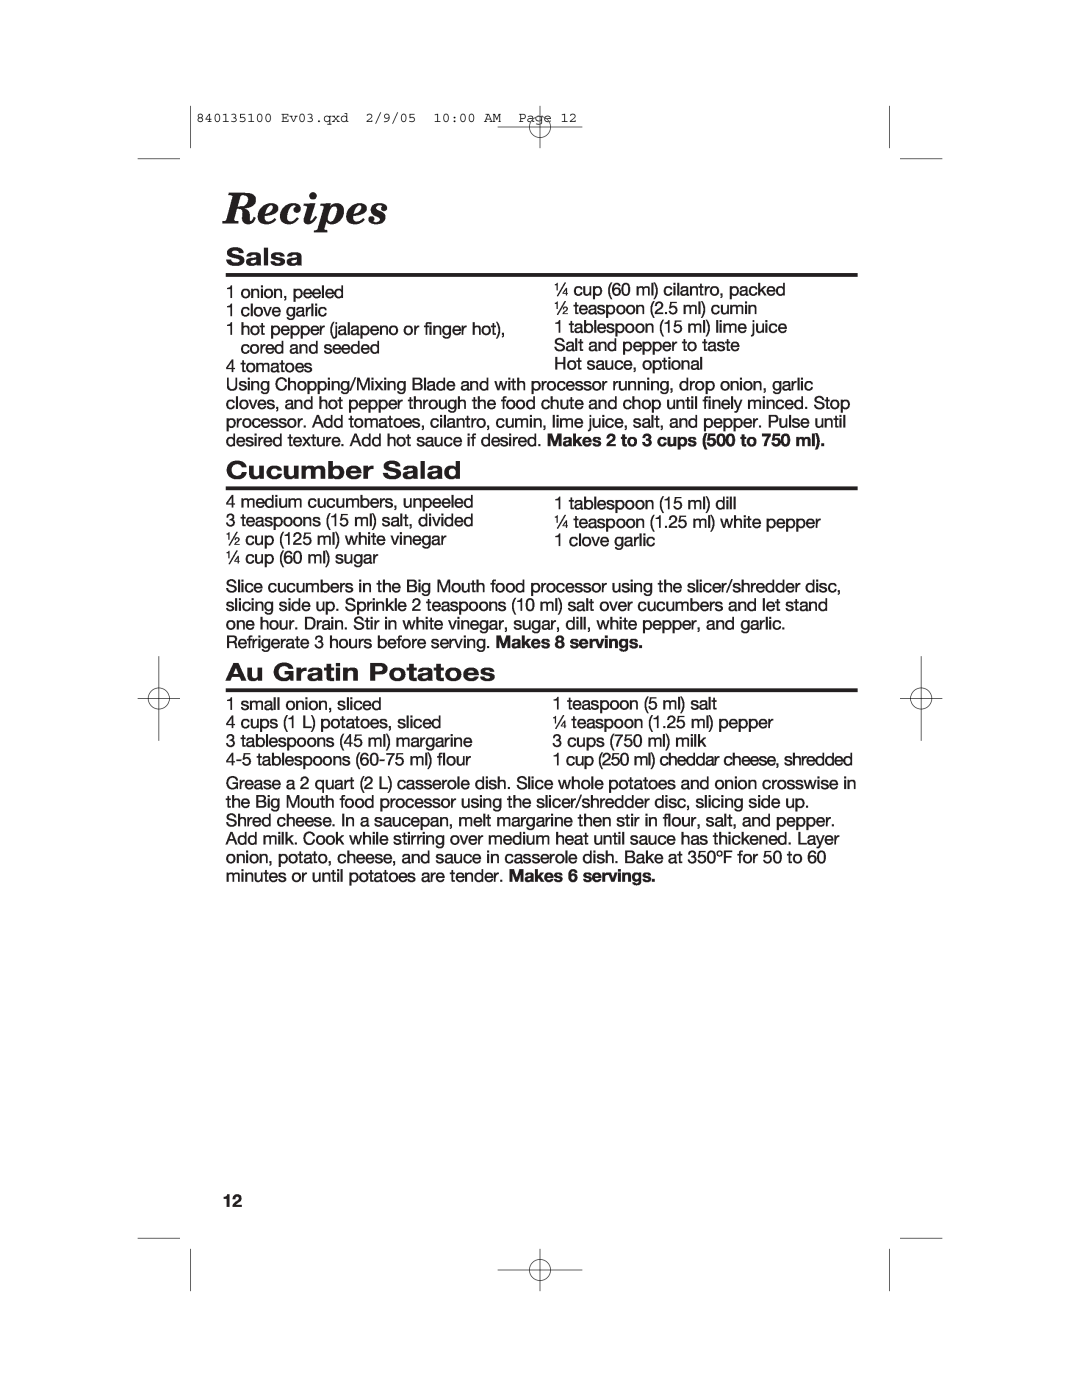 Hamilton Beach 840135100 manual Recipes, Salsa, Cucumber Salad, Au Gratin Potatoes 